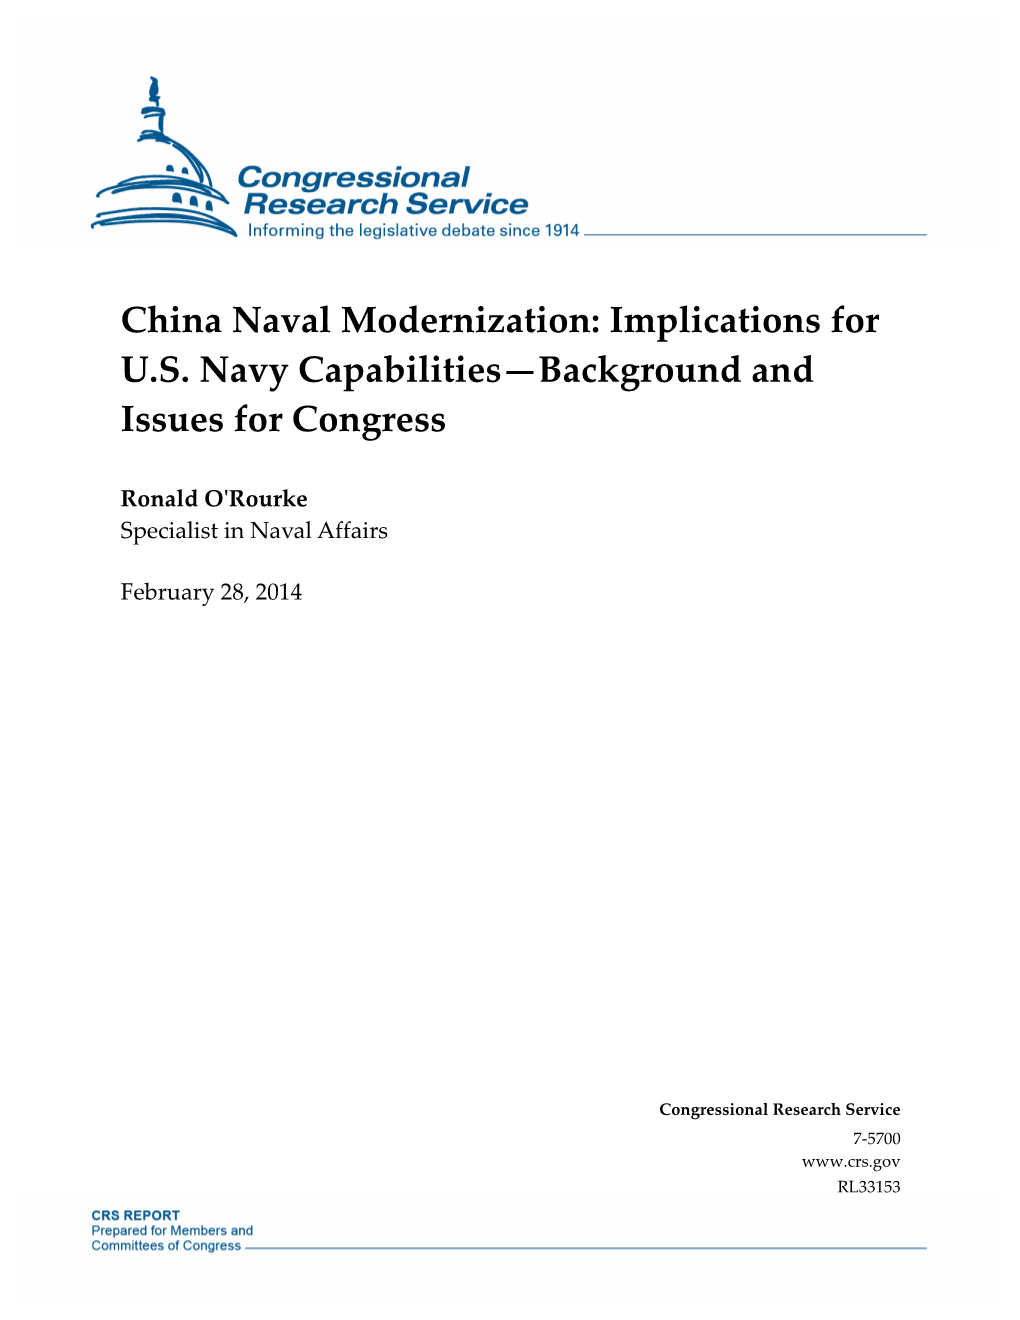 China Naval Modernization: Implications for US Navy Capabilities